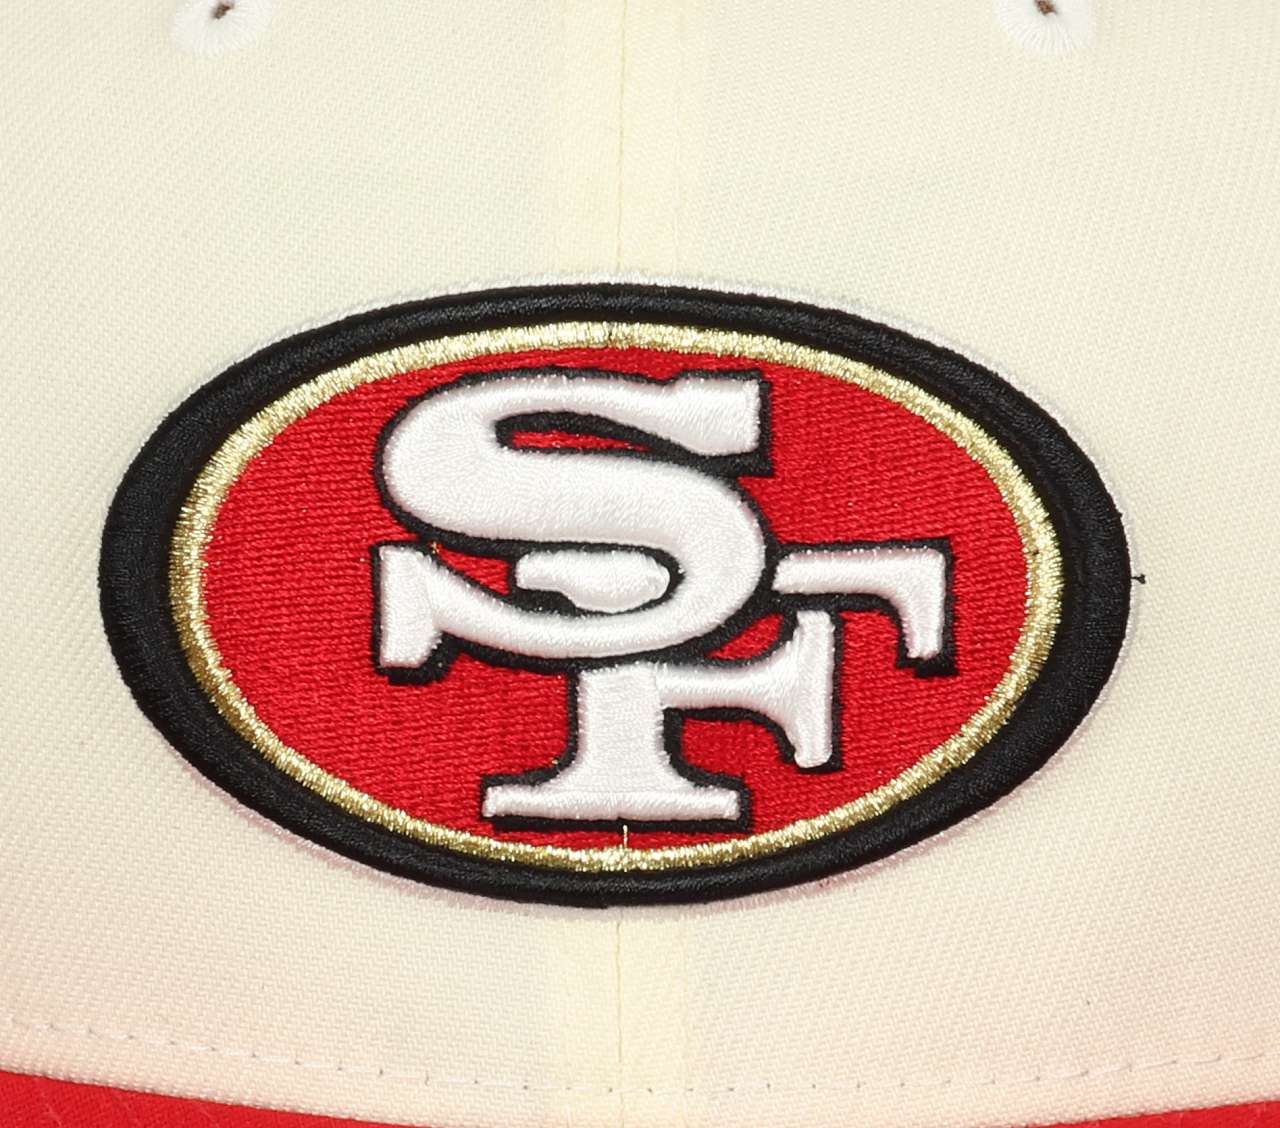 San Francisco 49ers NFL Pro Bowl 1993 Sidepatch Chrome 9Fifty Snapback Cap New Era